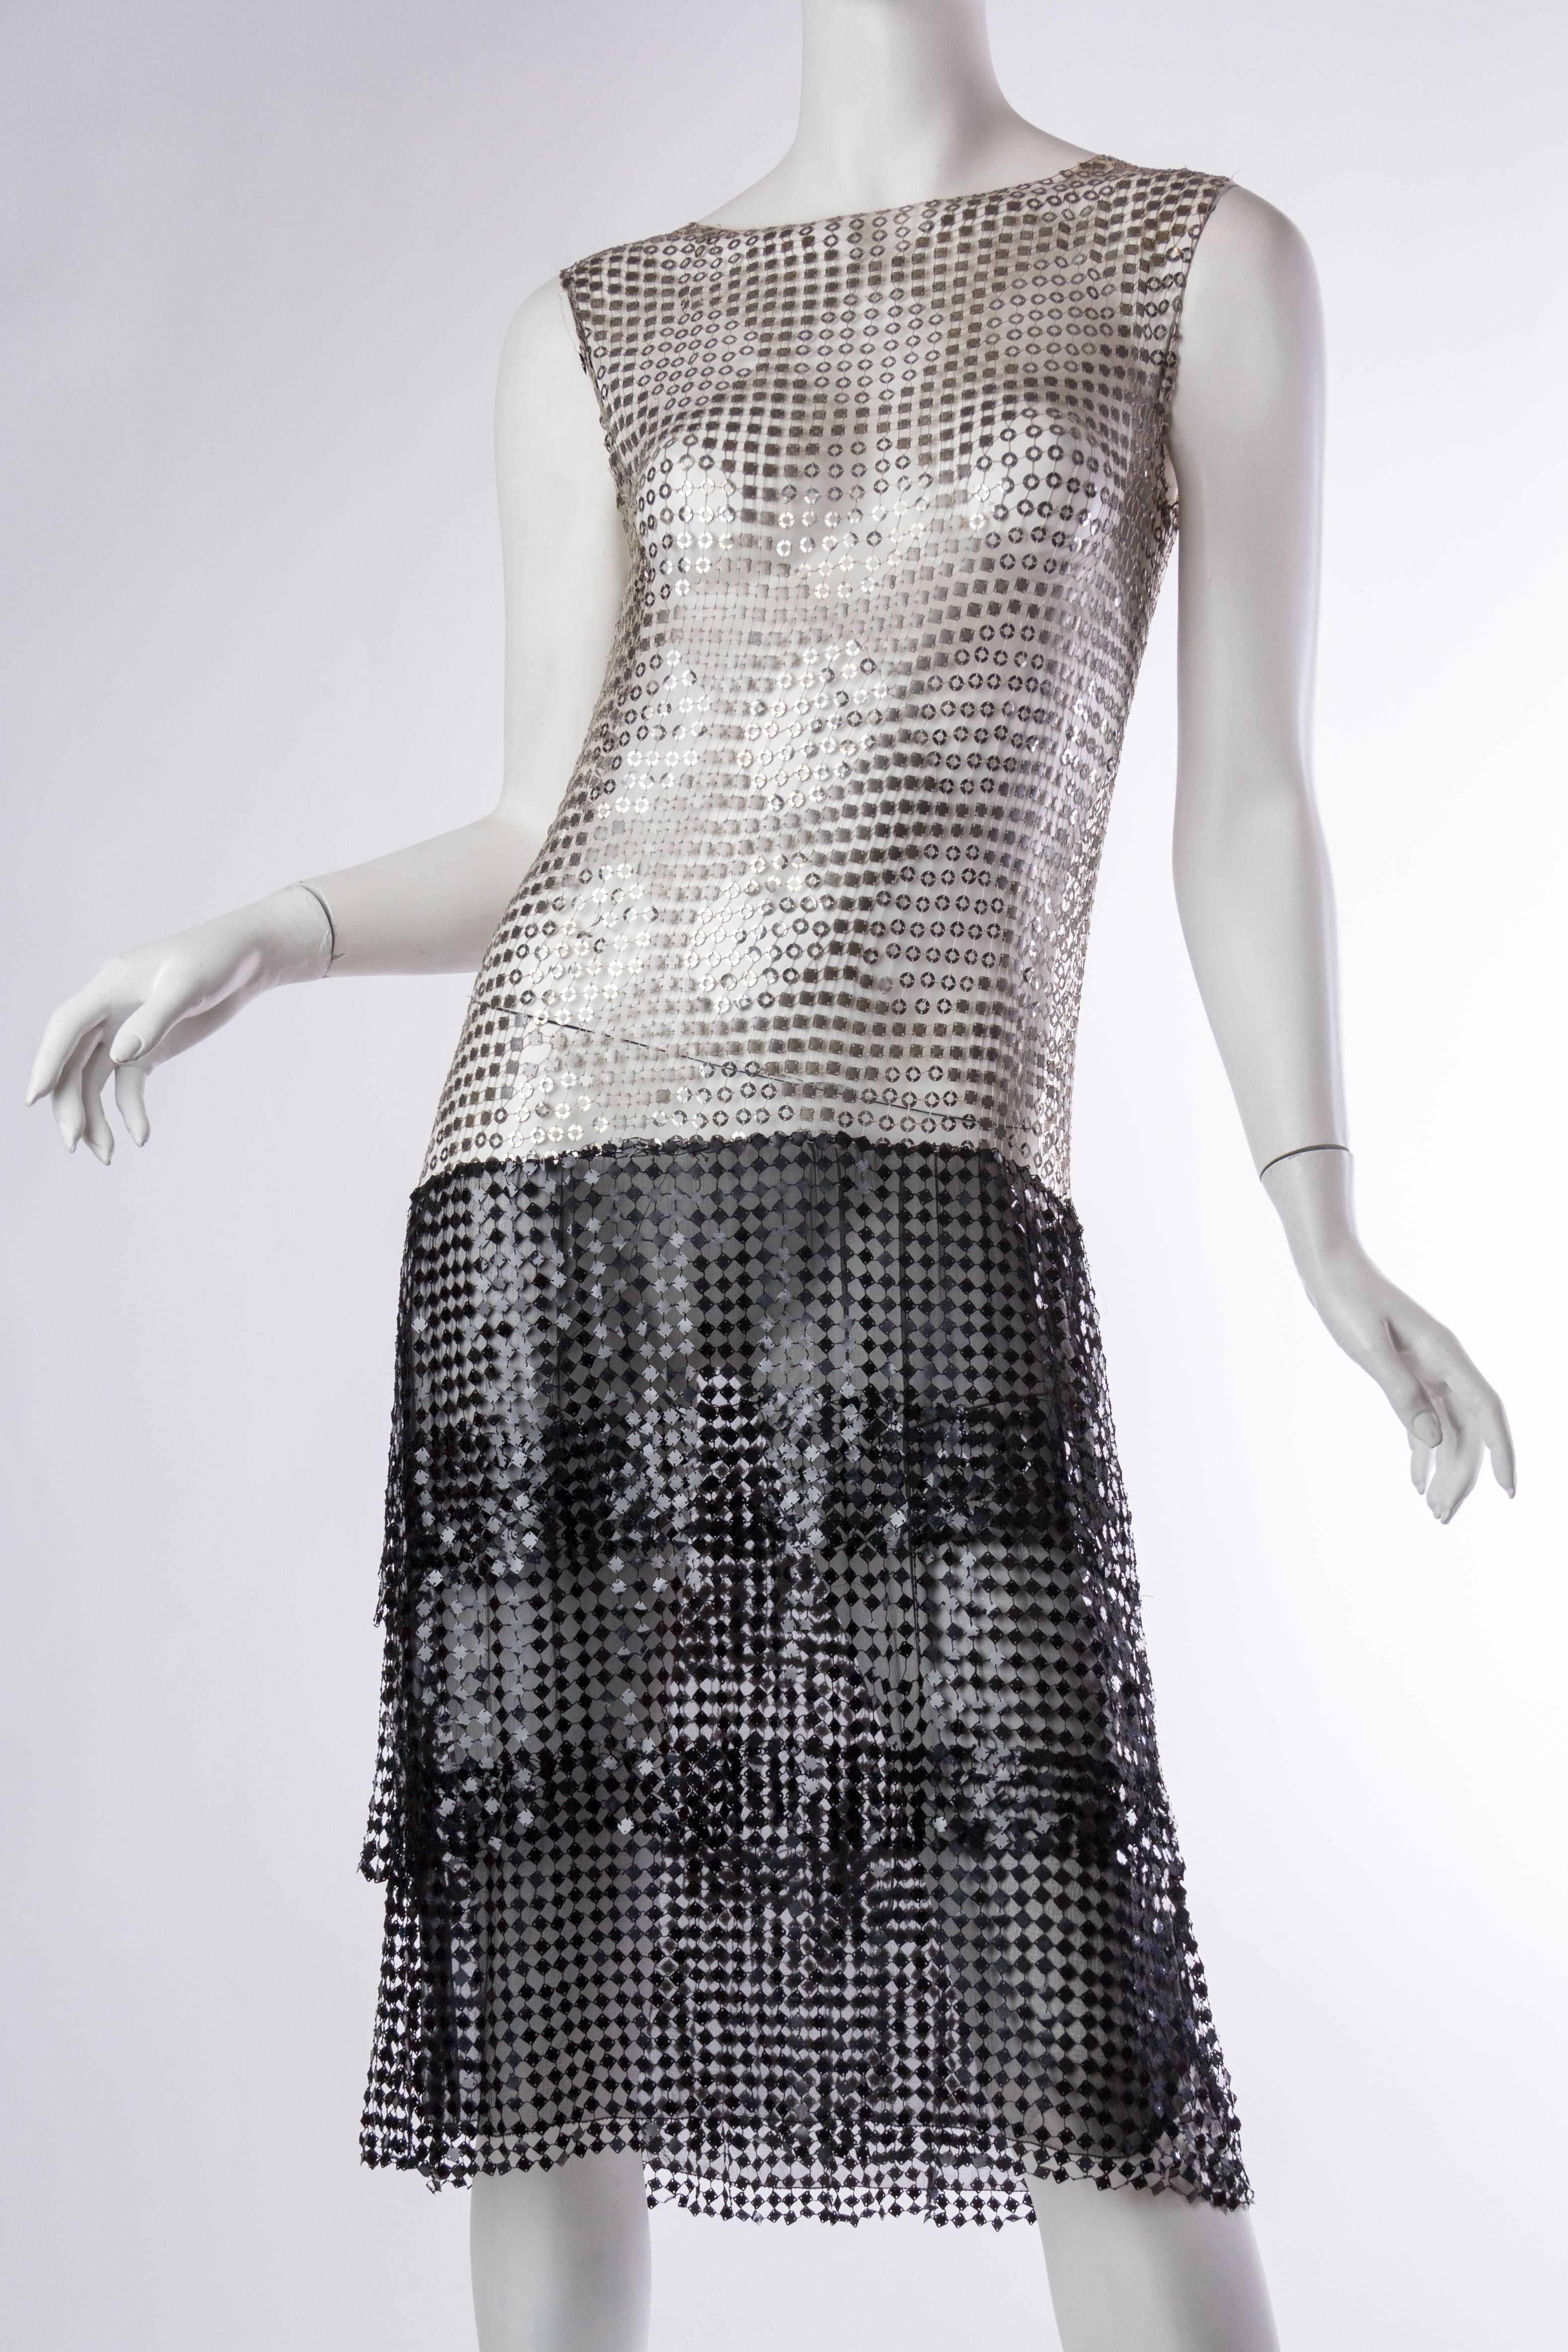 Spectacular 1920s Art Deco Sequin Net Dress (Grau)